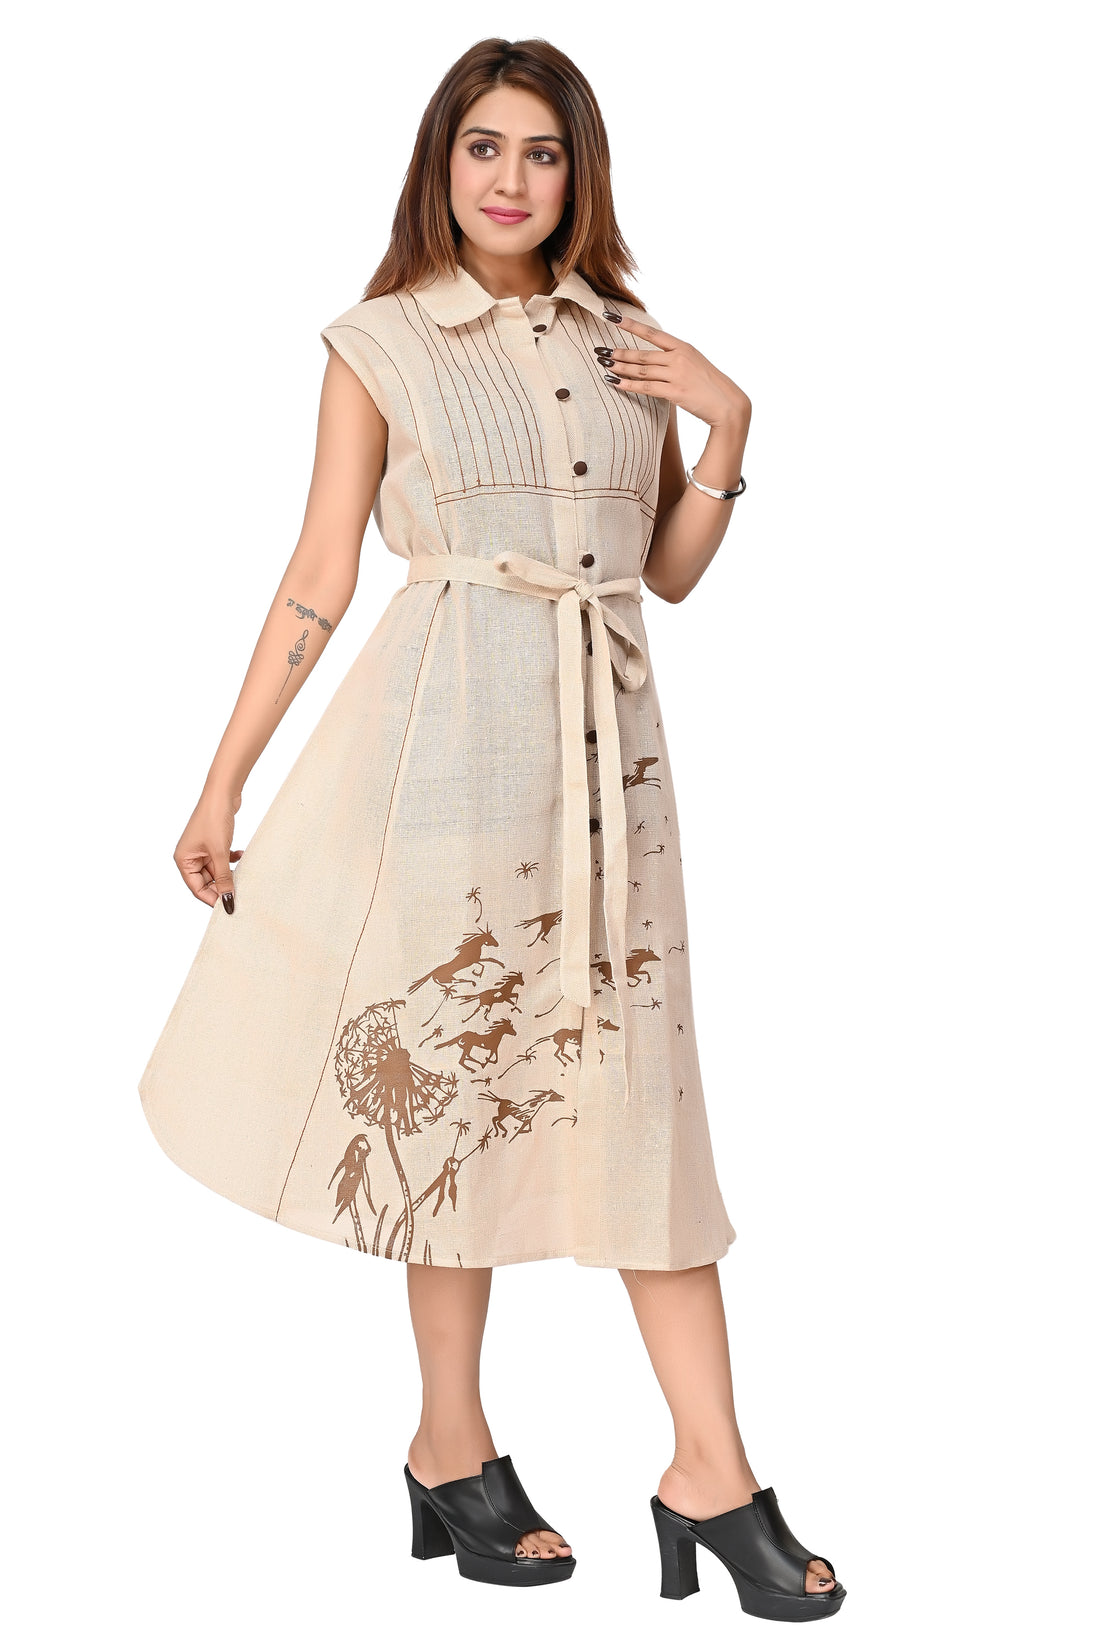 Premium Cotton Tunic Dress for Women in Fawn Colour